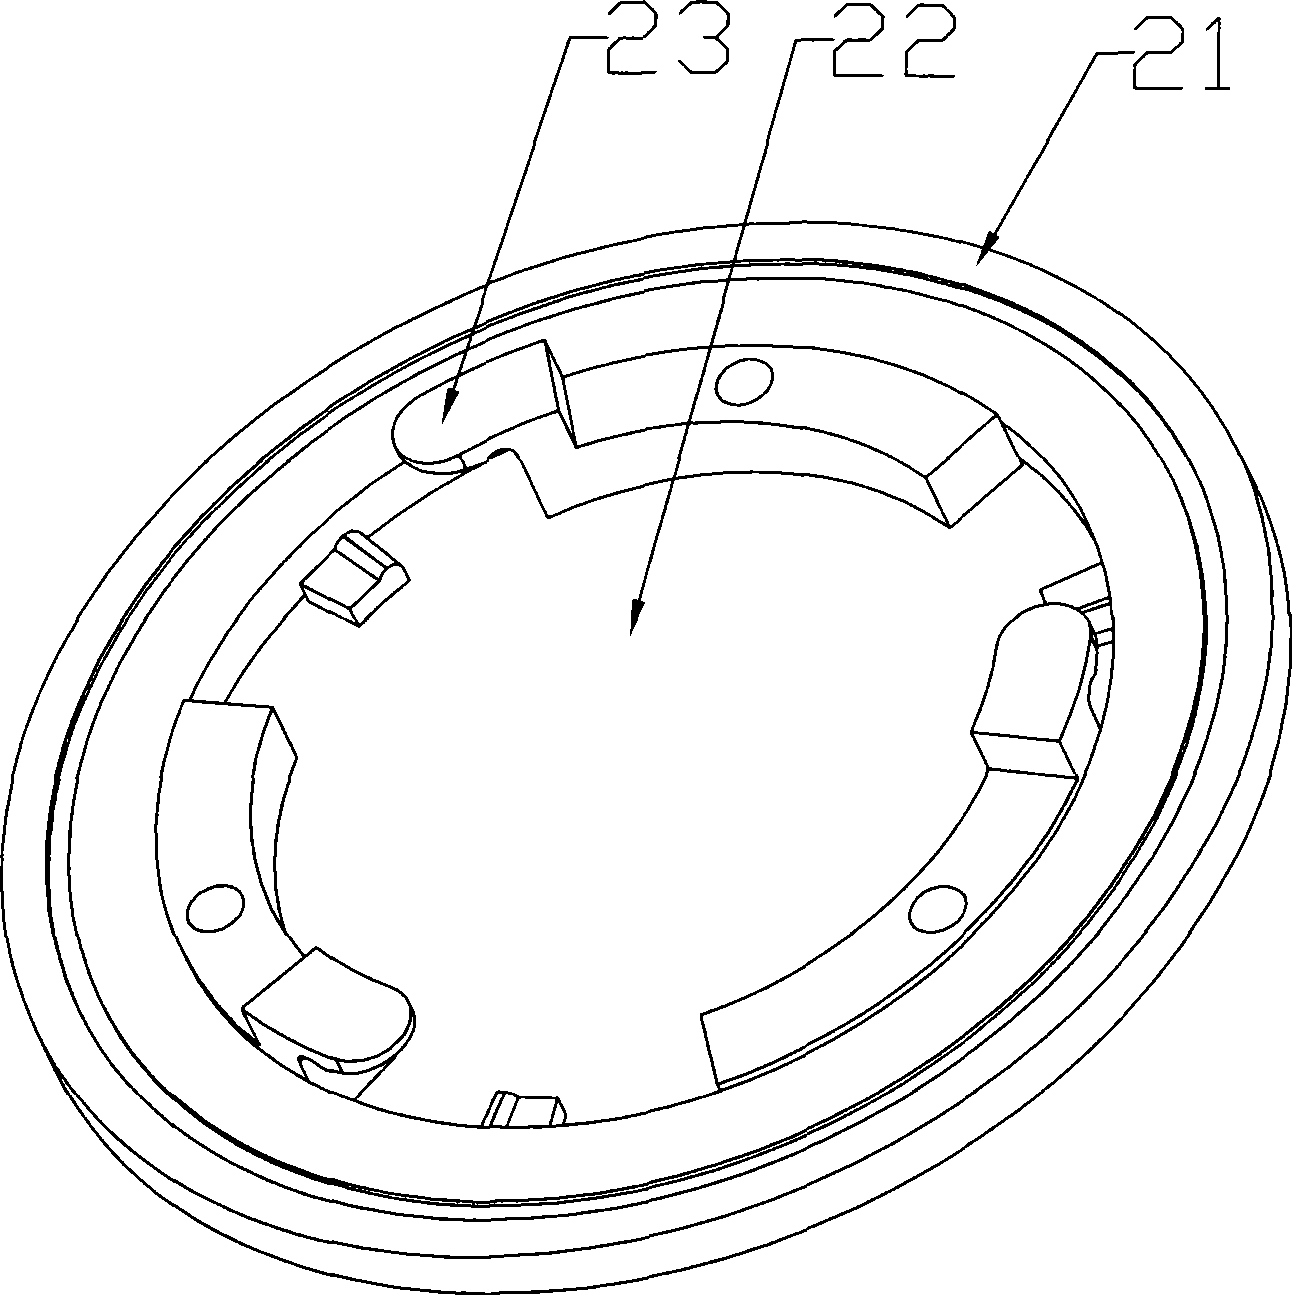 Circular plate type super-filter